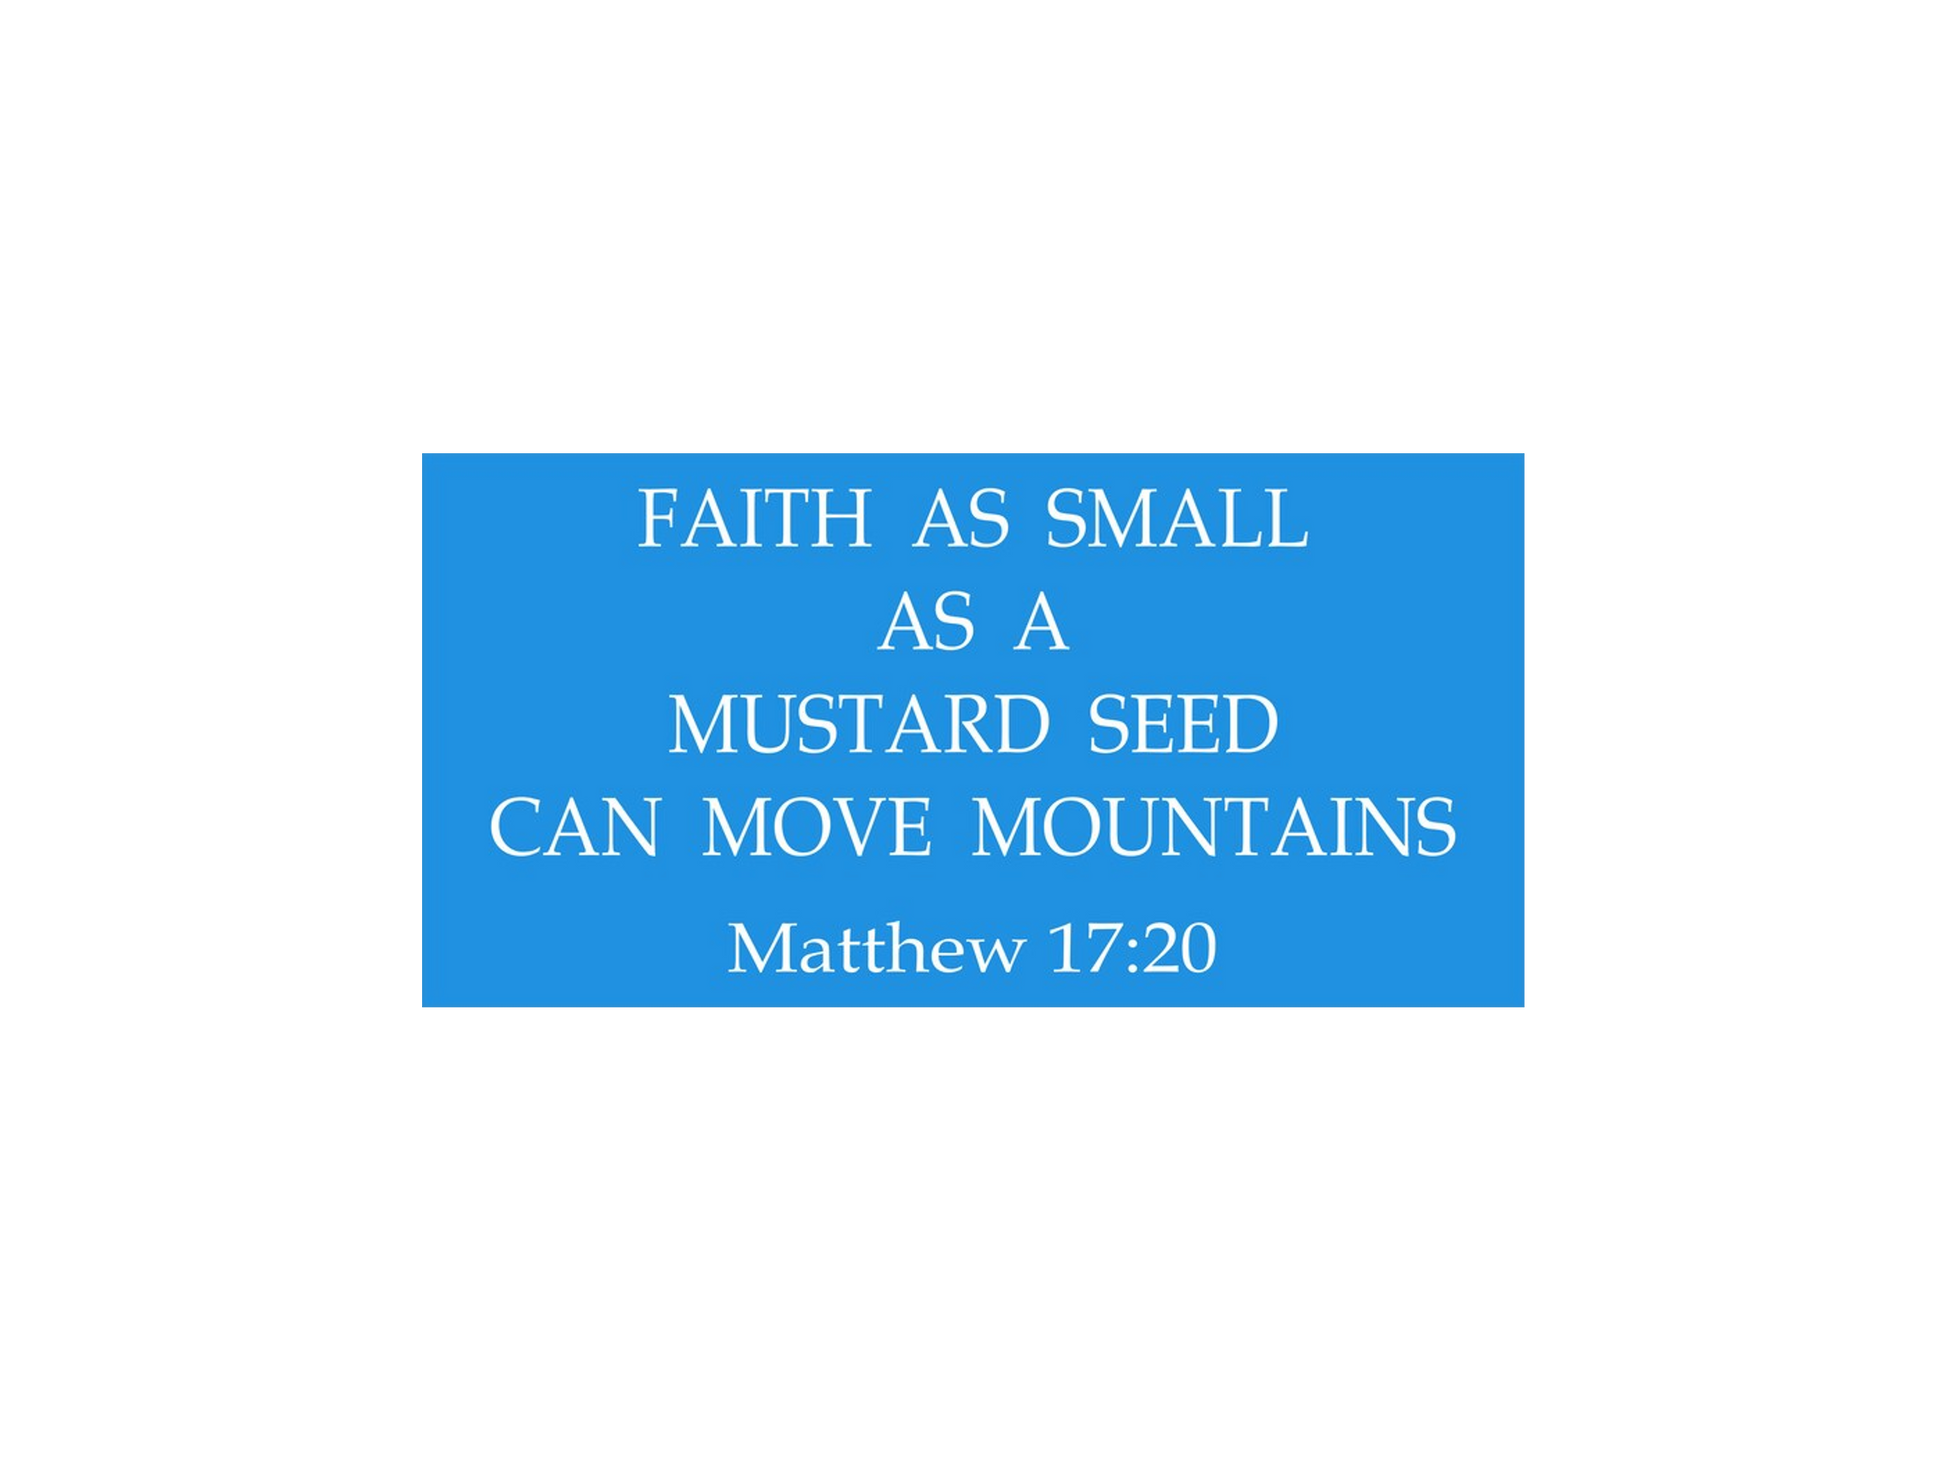 Faith Matthew 17:20 Stencil - Superior Stencils